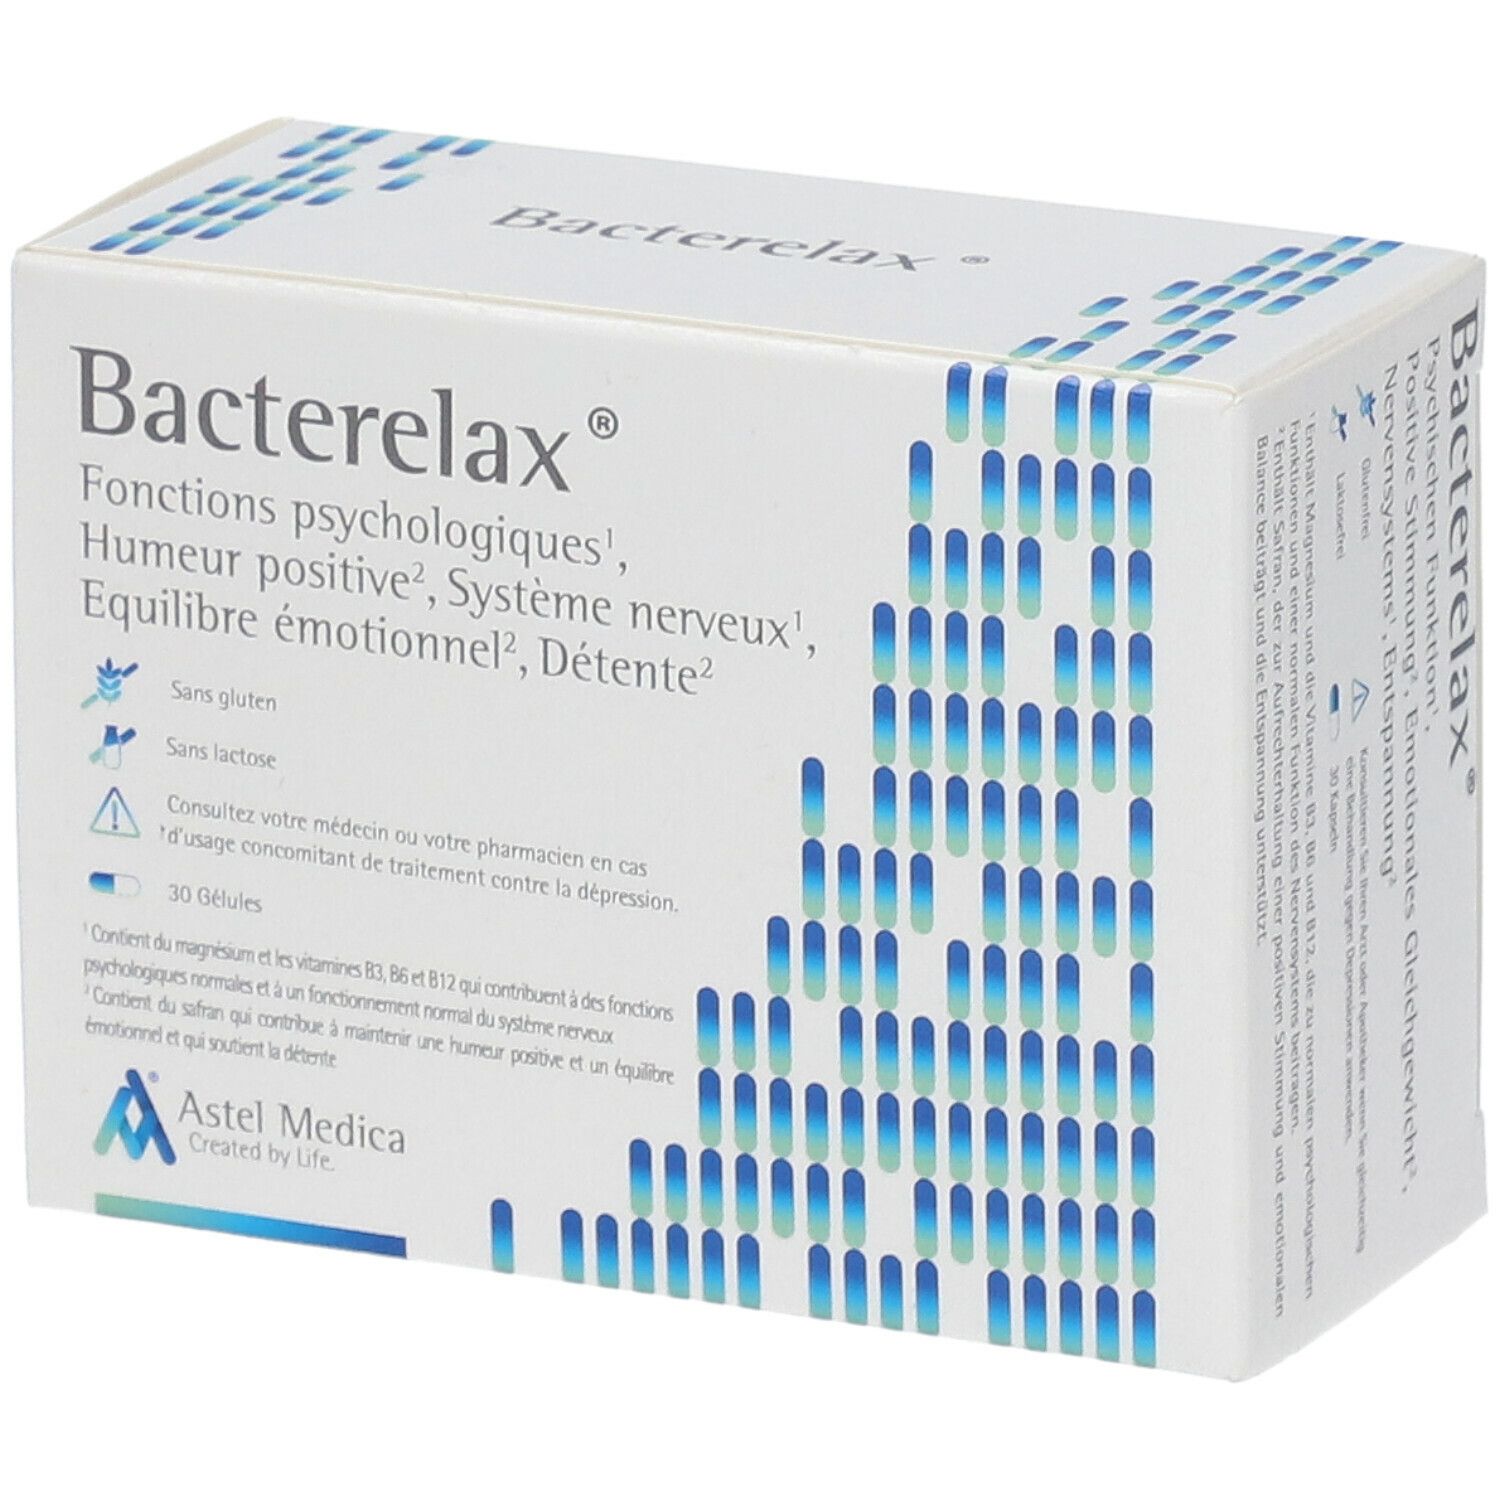 Bacterelax®